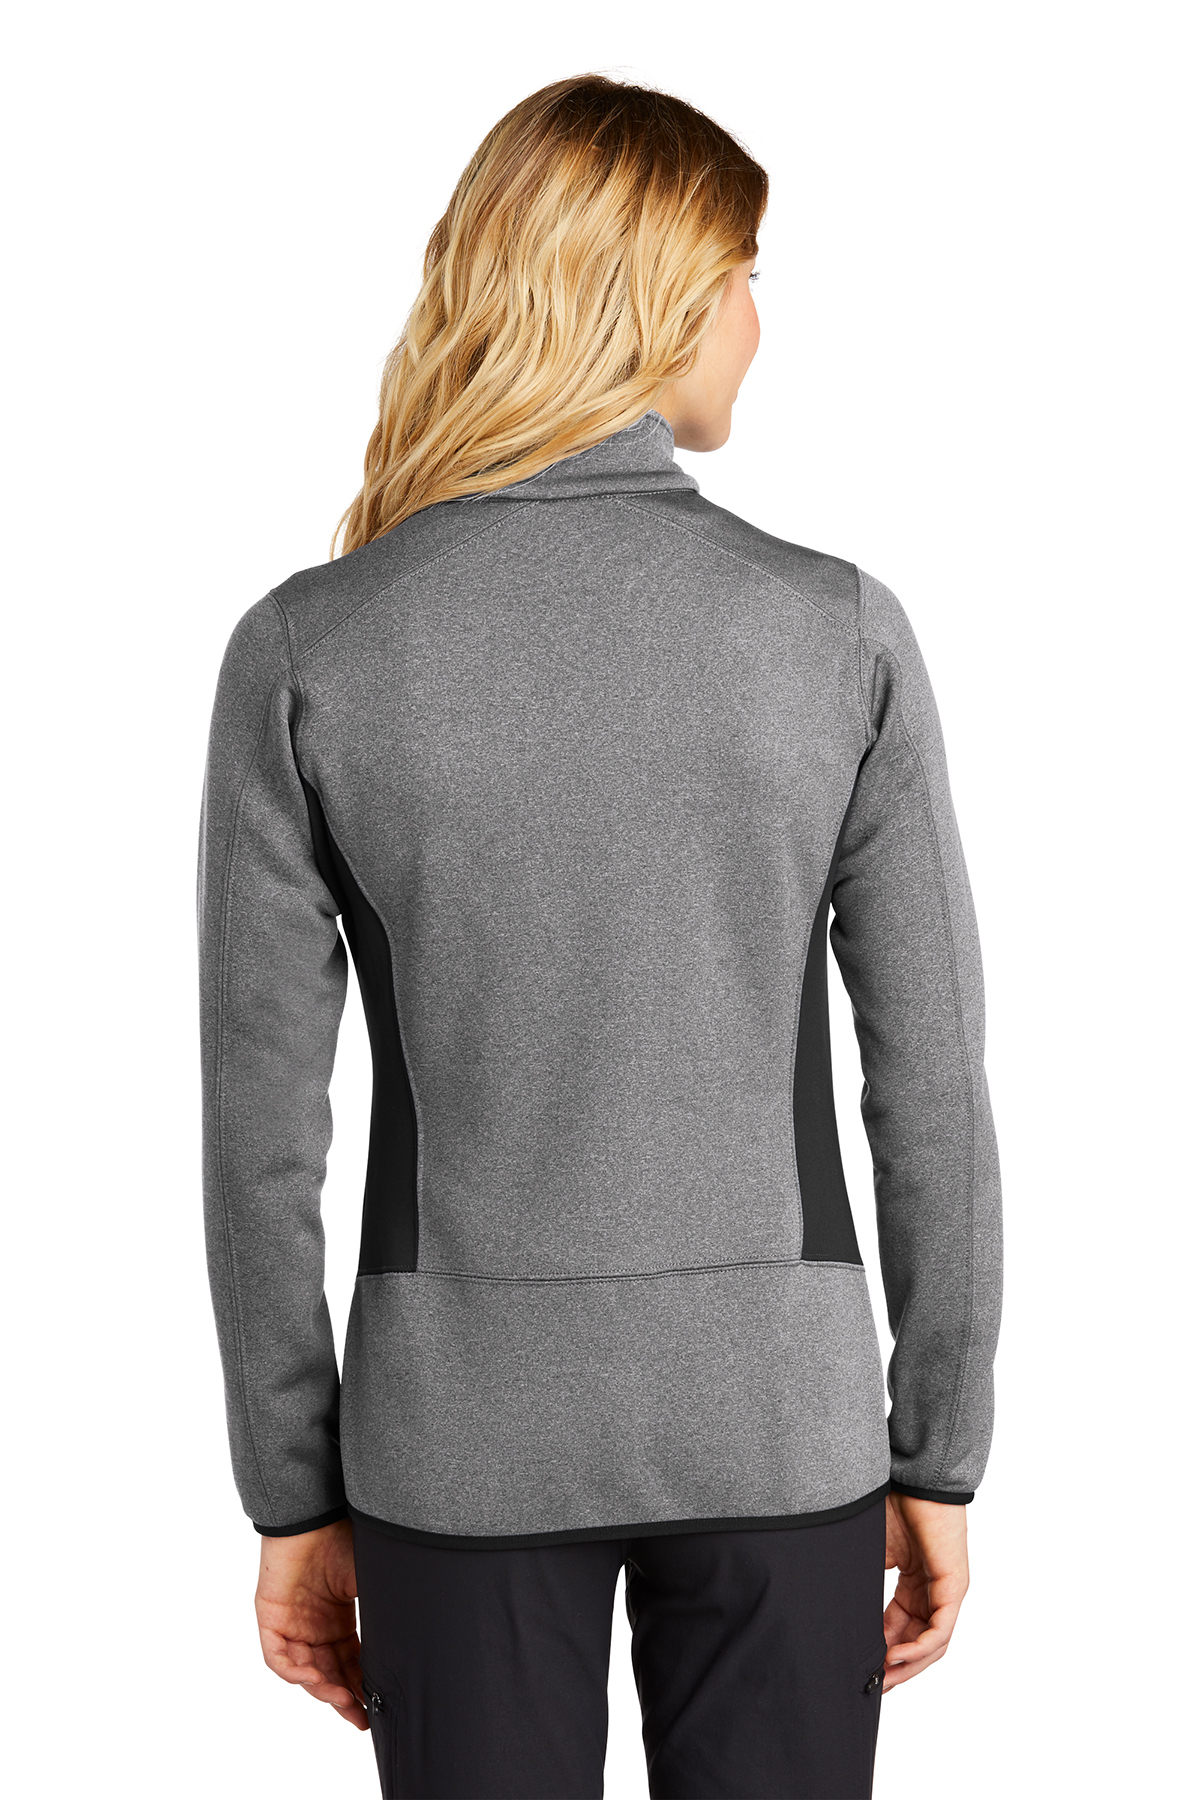 Eddie Bauer Ladies Full-Zip Heather Stretch Fleece Jacket | Product ...